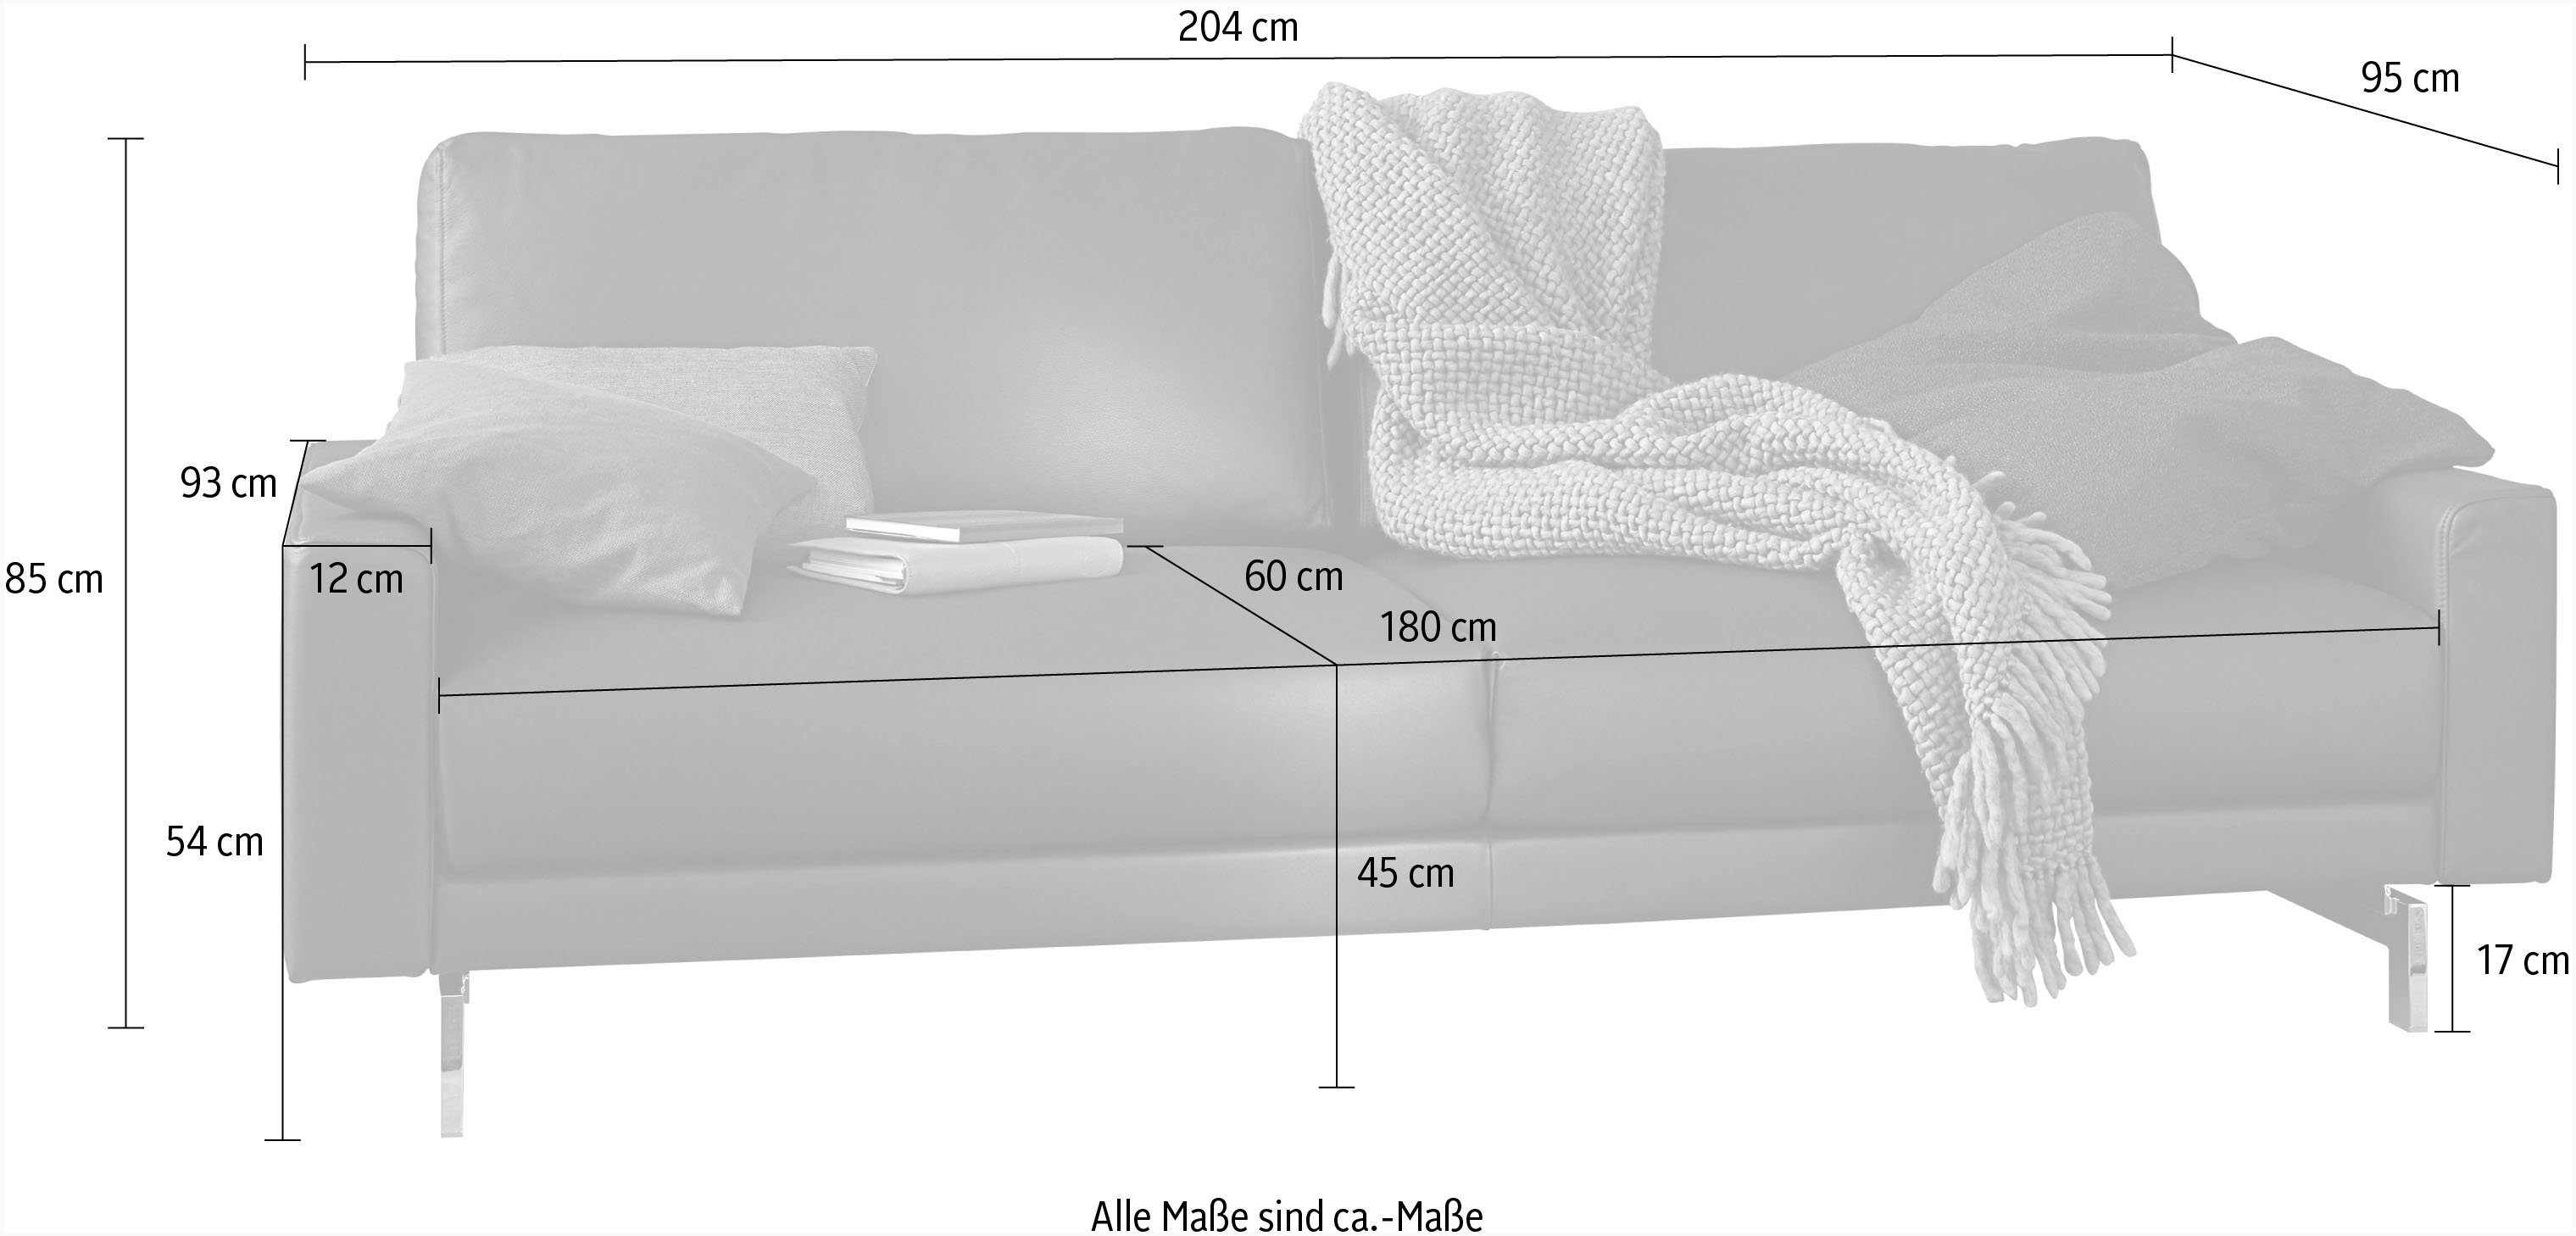 cm hs.450, Fuß 204 Breite hülsta 3-Sitzer Armlehne glänzend, niedrig, sofa chromfarben